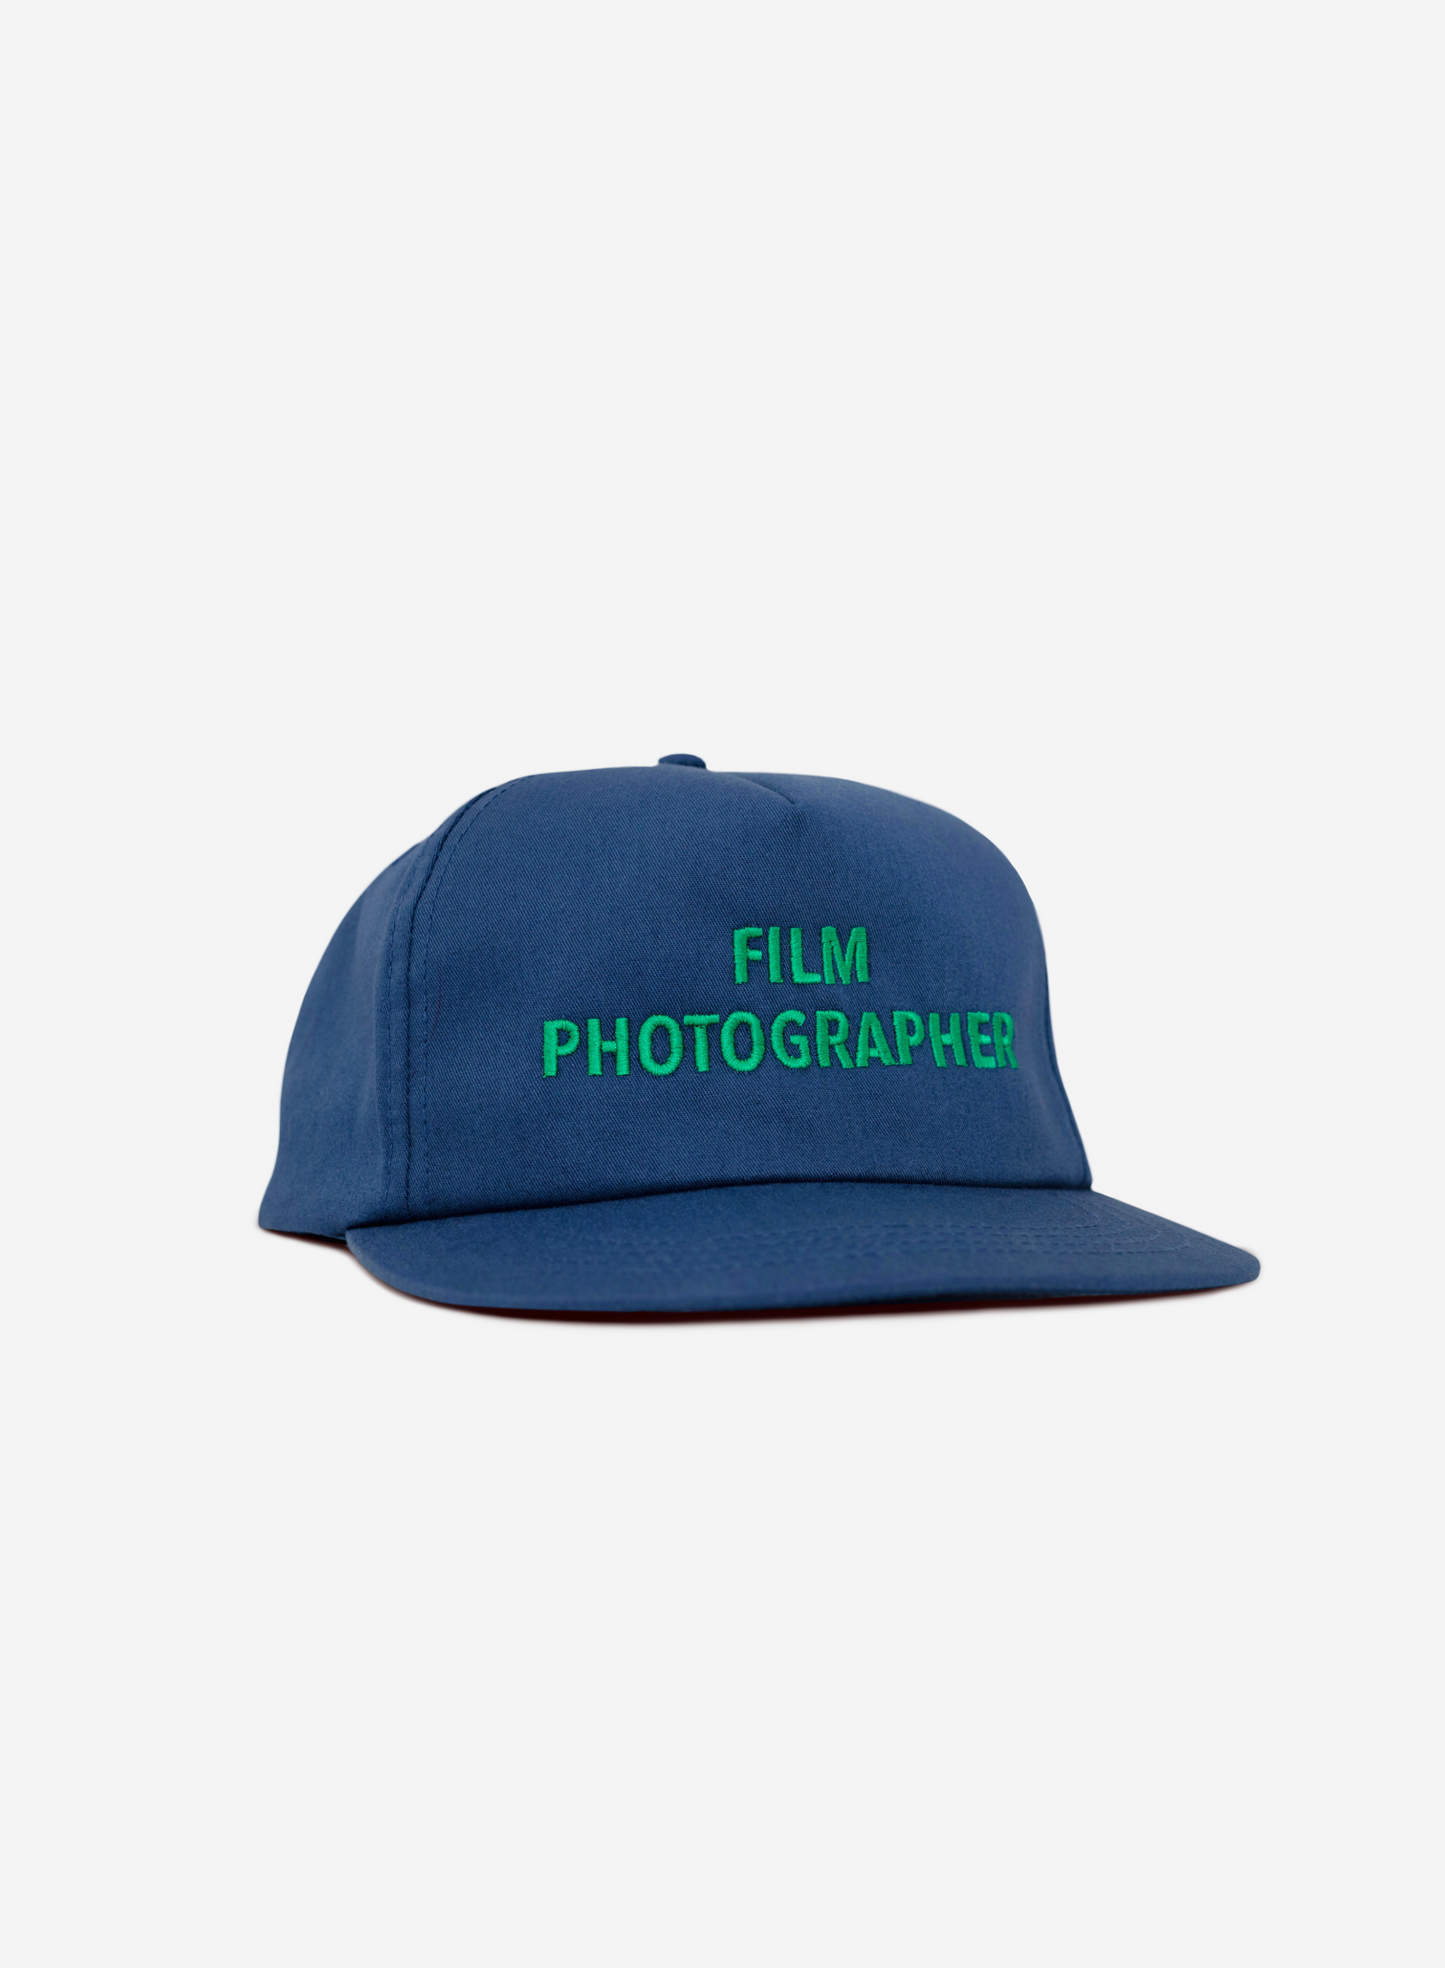 FILM PHOTOGRAPHER SNAPBACK HAT (BLUE/GREEN)